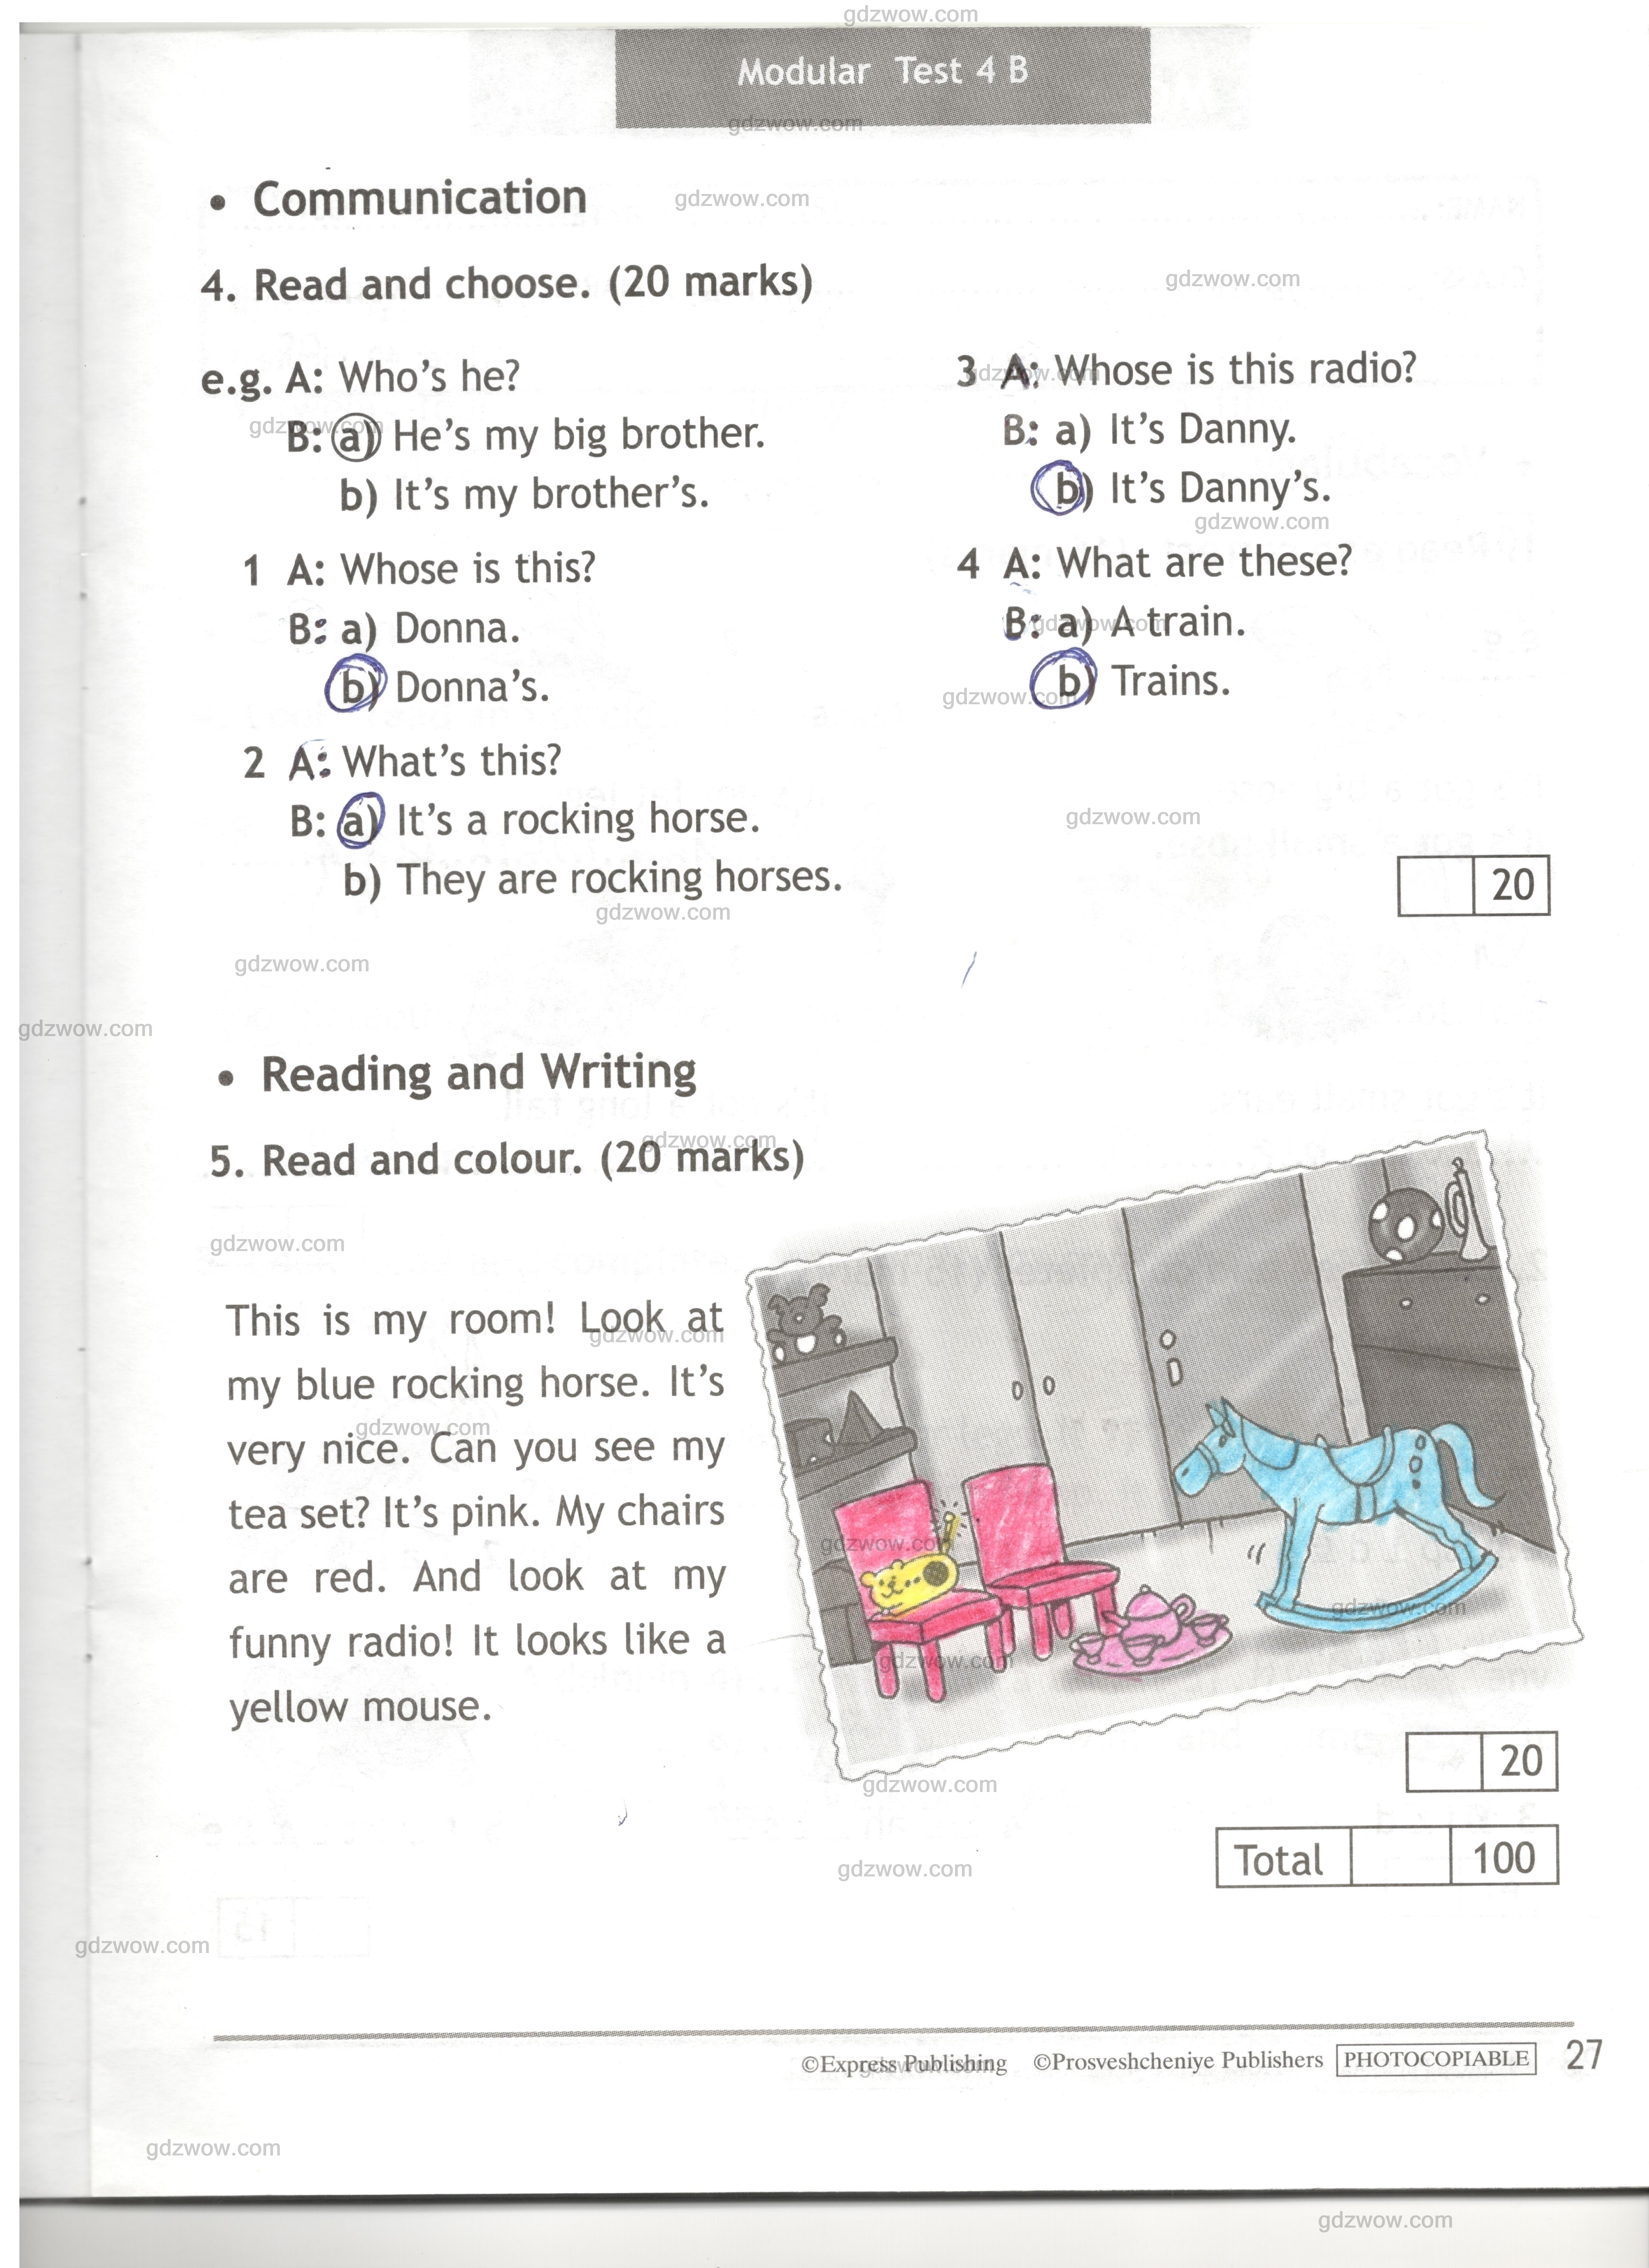 Test booklet 3 ответы. Test booklet 3 класс Spotlight. Быкова 3 класс Test booklet. Быкова Поспелова английский 3 класс тест буклет. Английский язык 4 класс Test booklet.